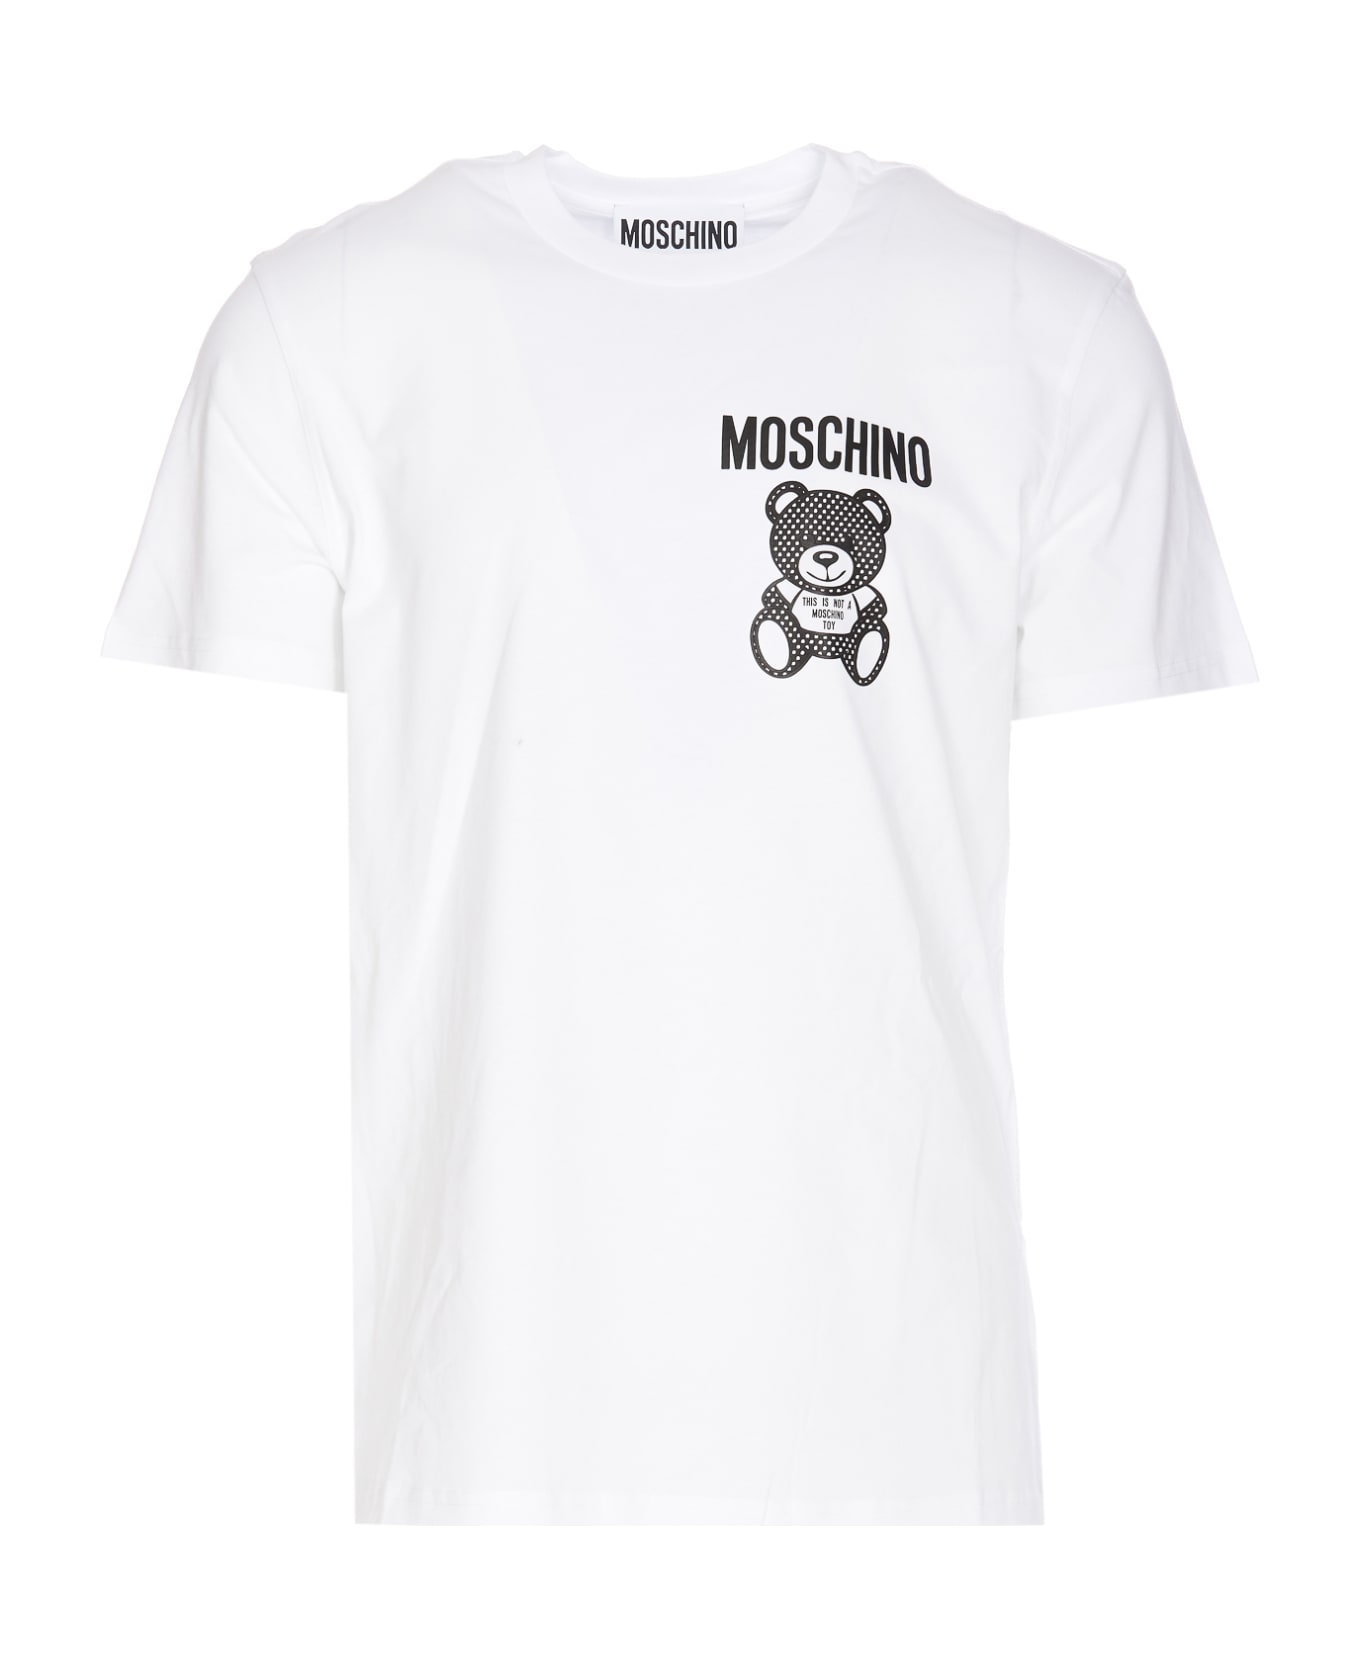 Moschino In Love We Trust T-shirt - White Tシャツ